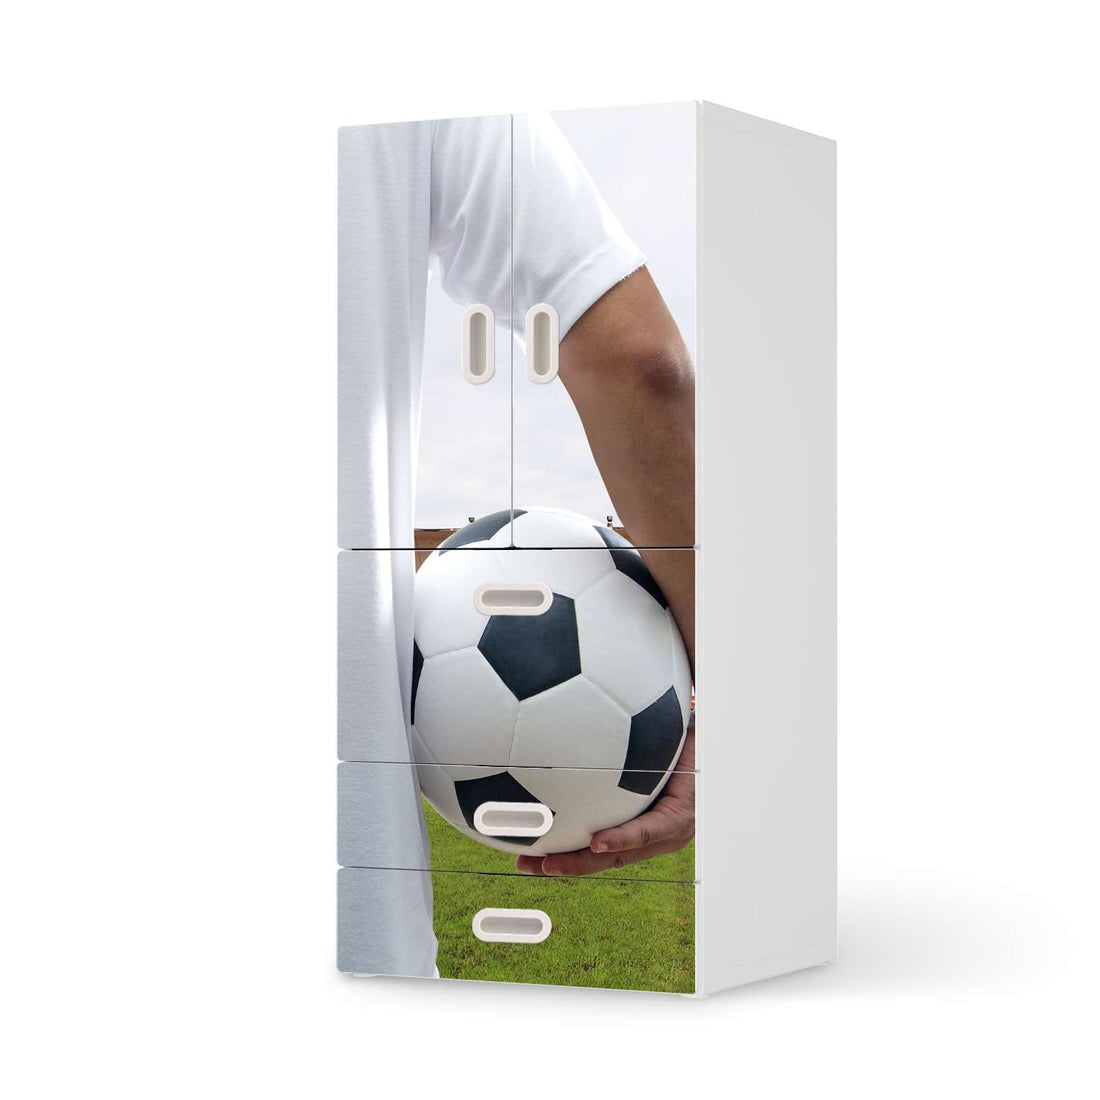 Möbelfolie Footballmania - IKEA Stuva / Fritids kombiniert - 3 Schubladen und 2 kleine Türen  - weiss